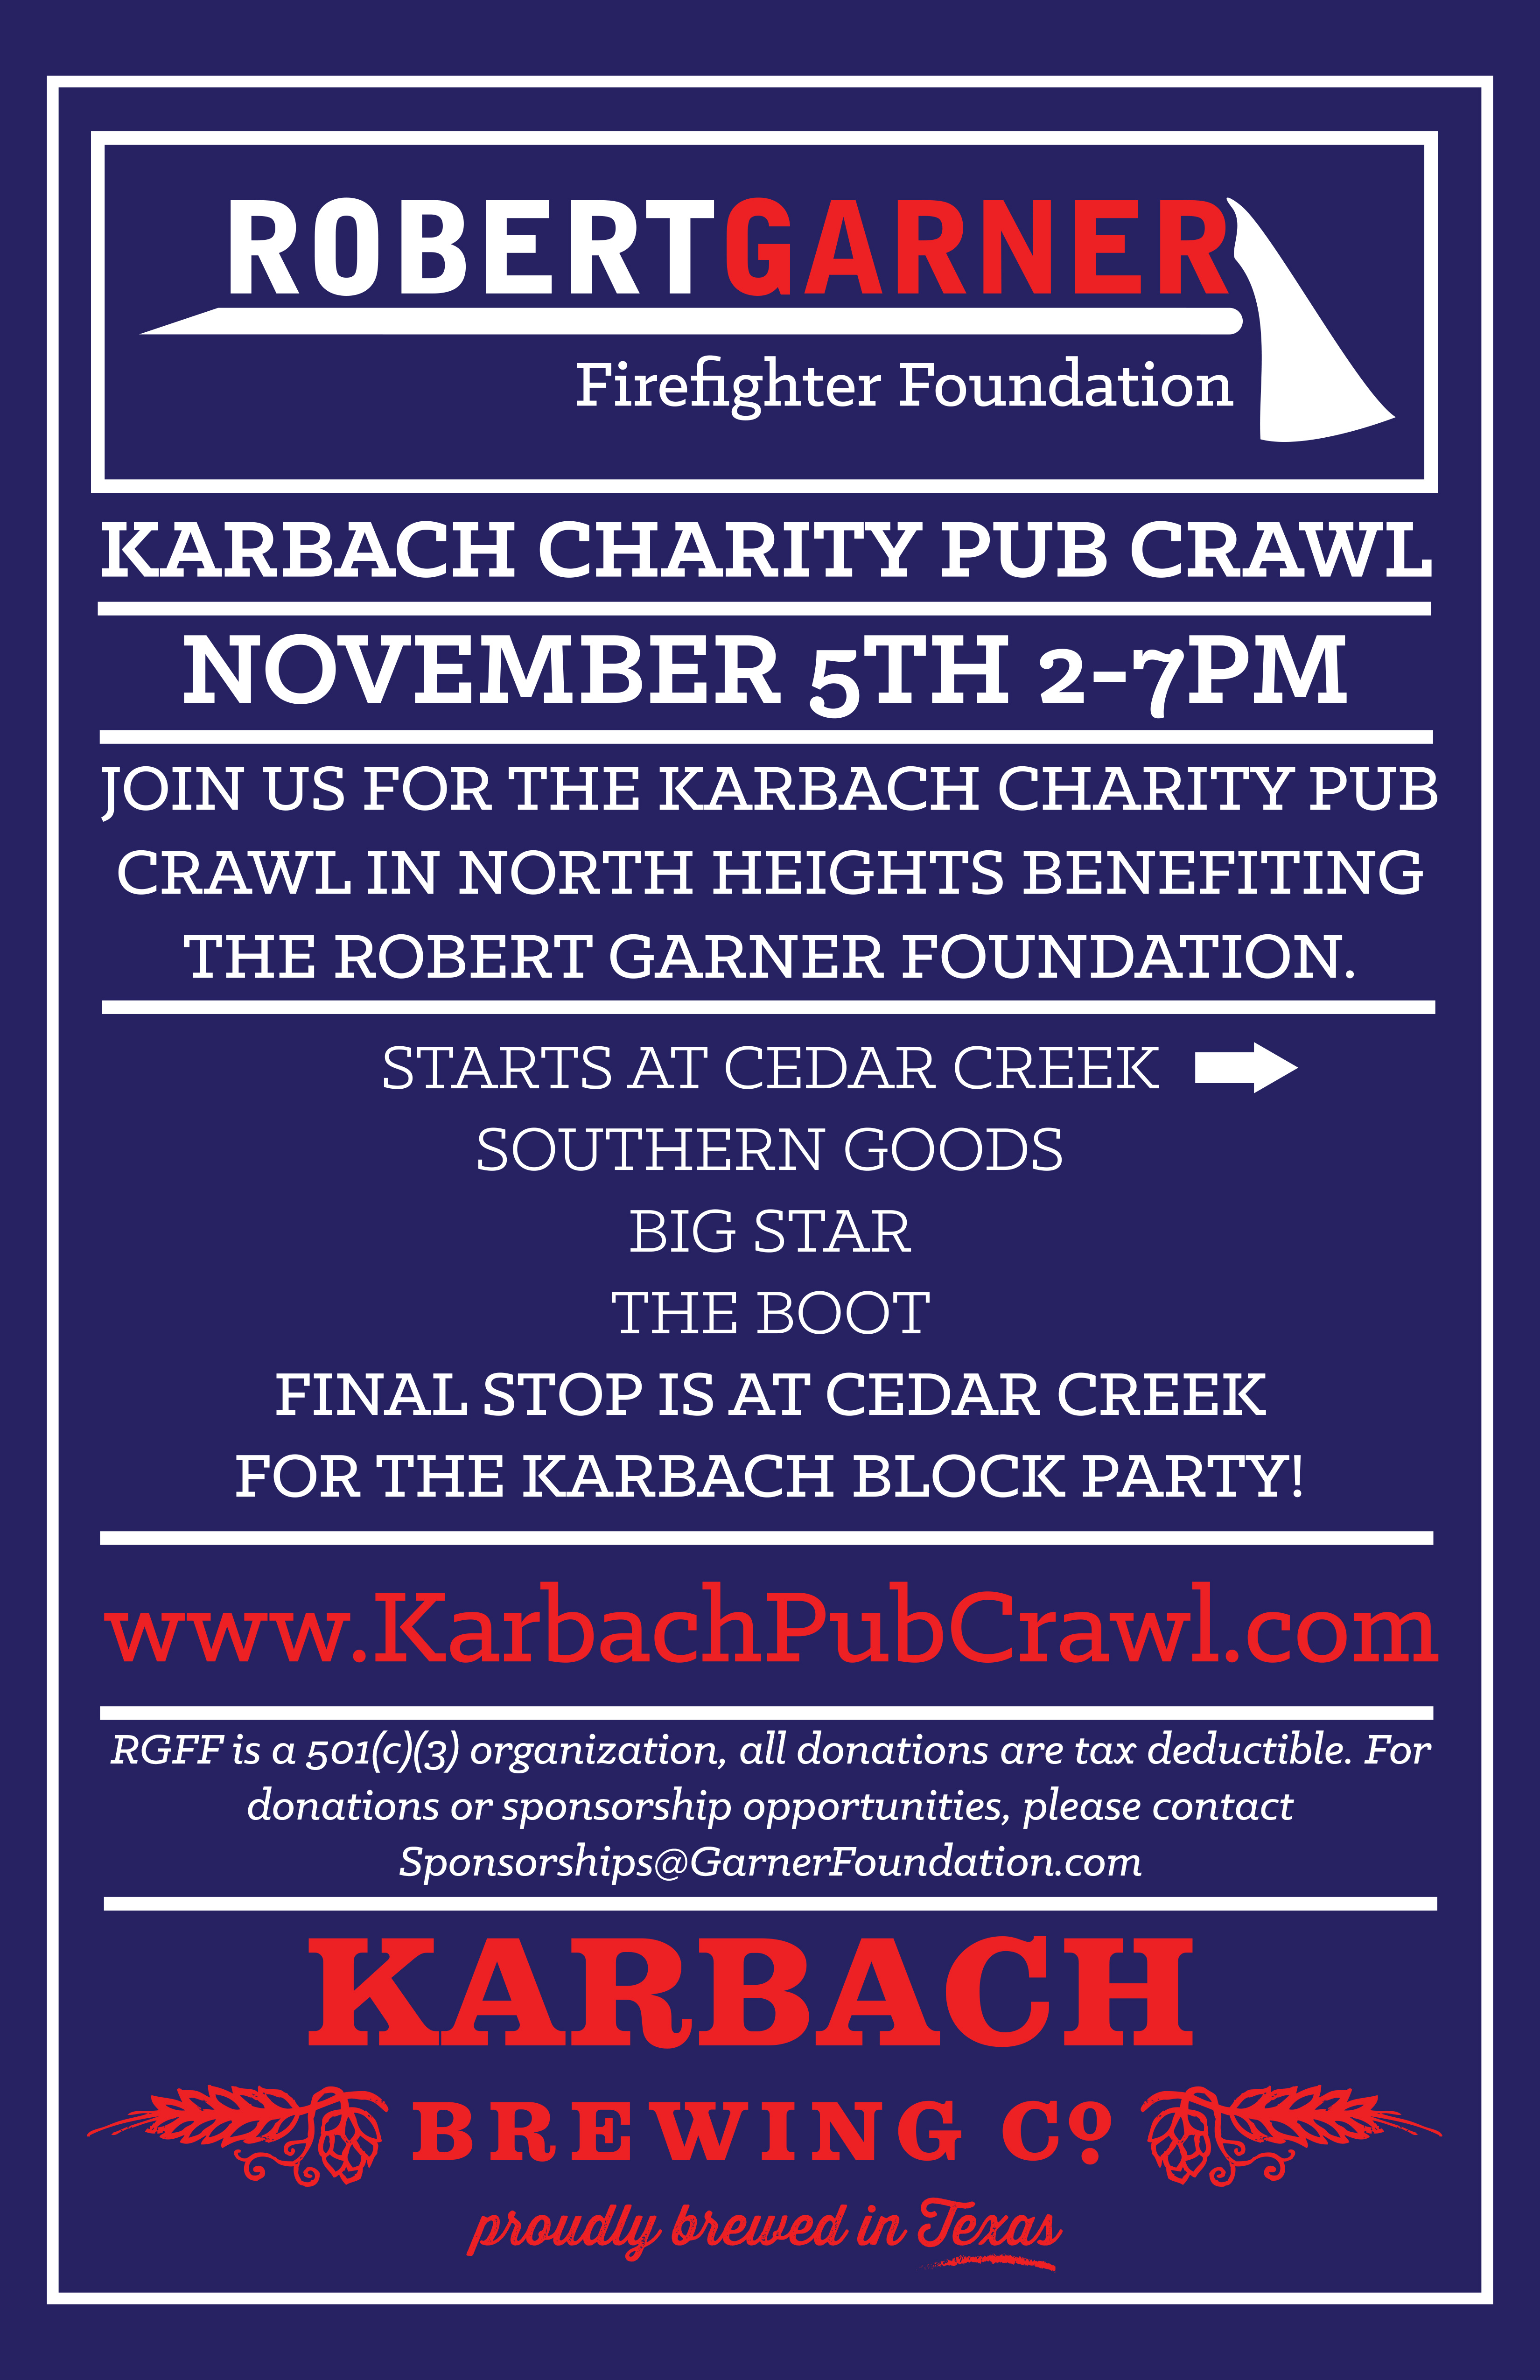 Karbach Charity Pub Crawl @ cedar creek | Houston | Texas | United States